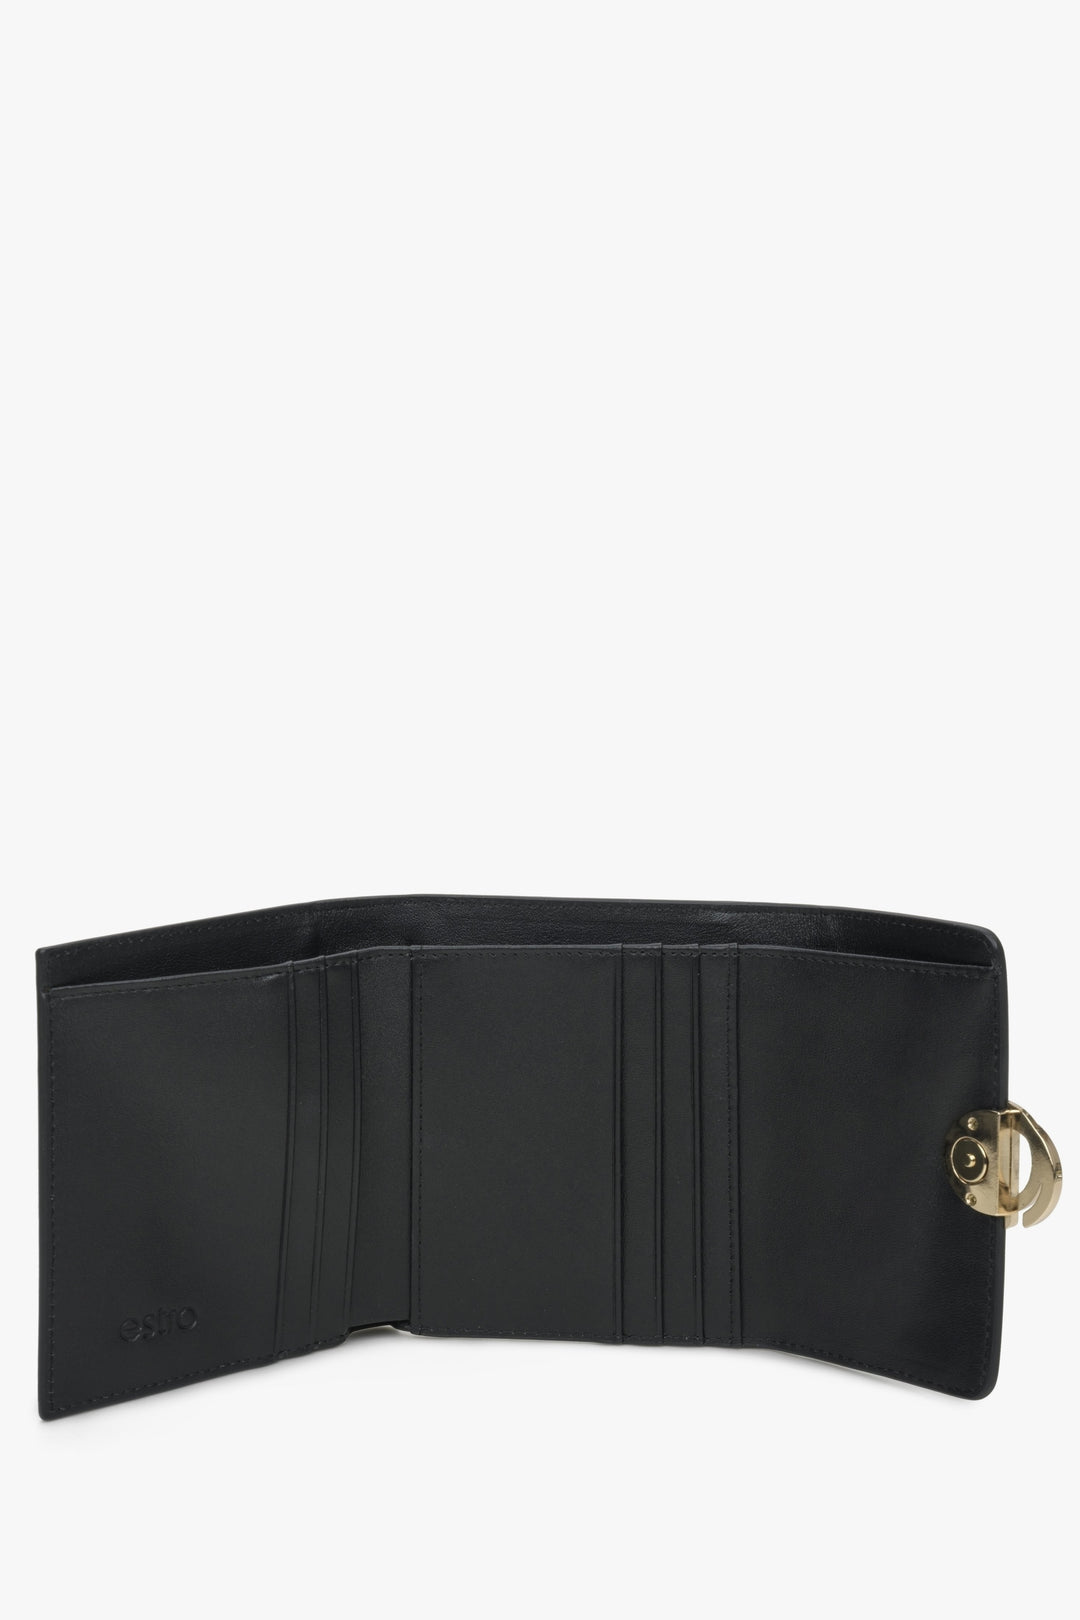 Tri-fold women's black wallet - interior.